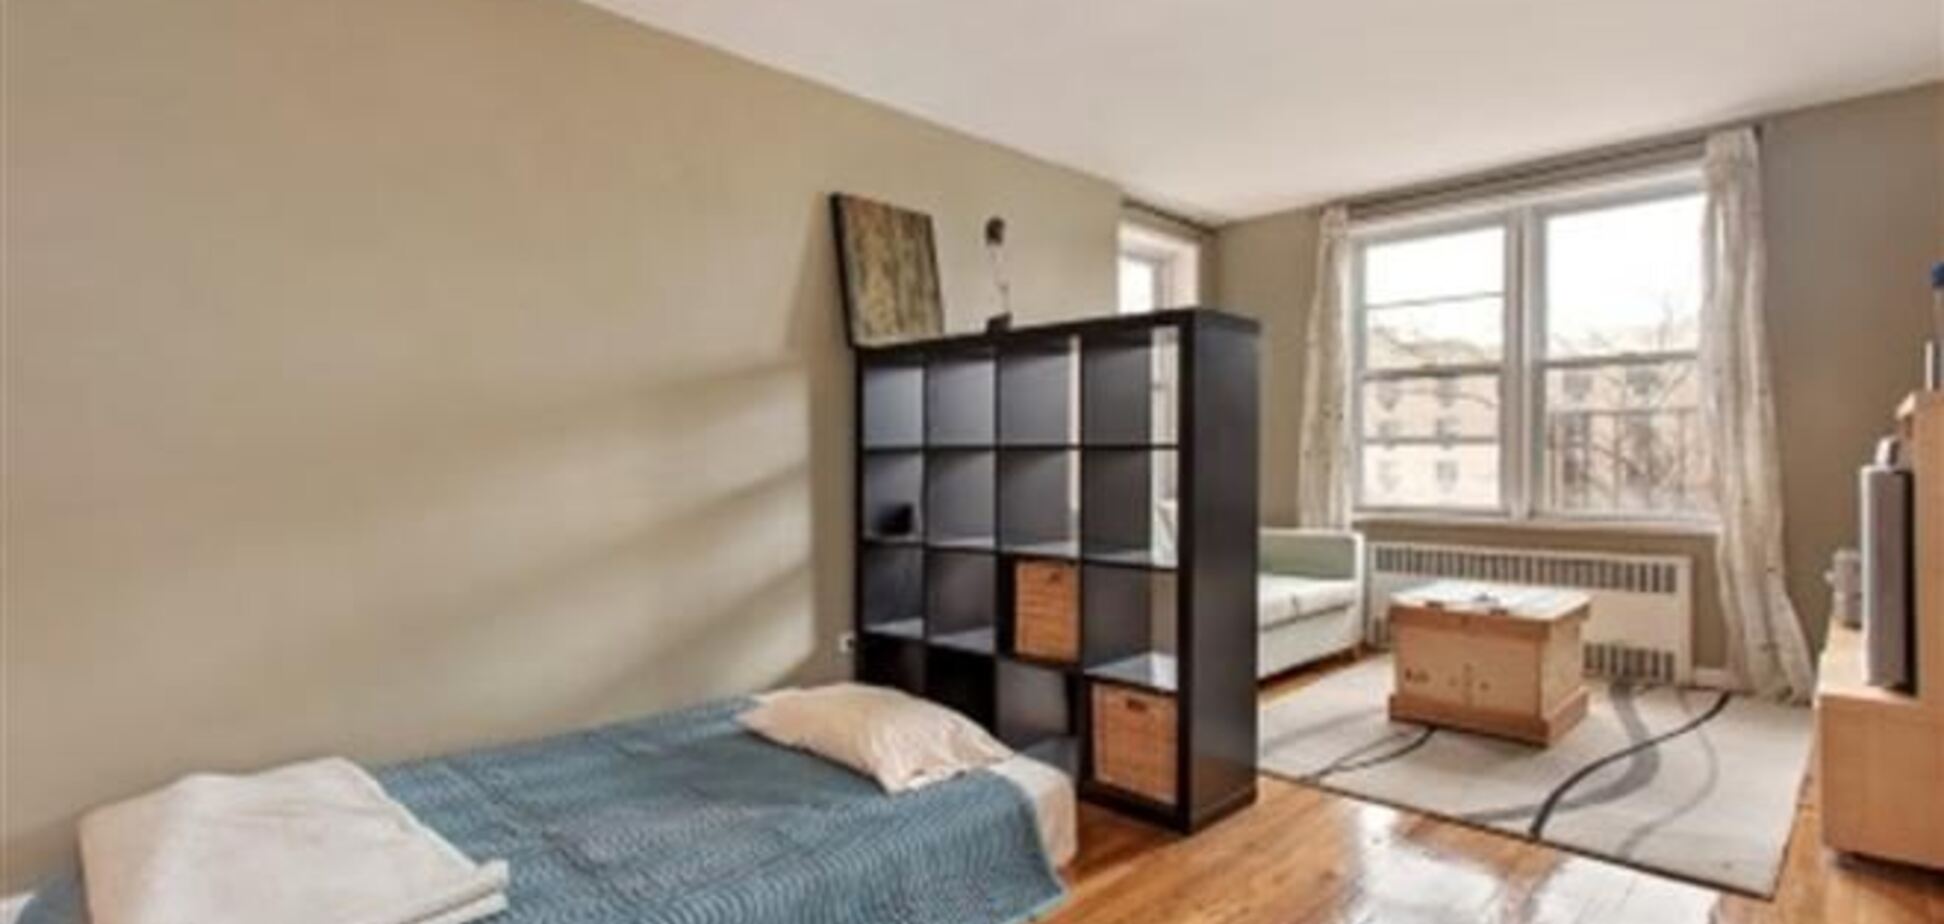 Цена квартиры на манхэттене дешевая апартаменты в пхукете